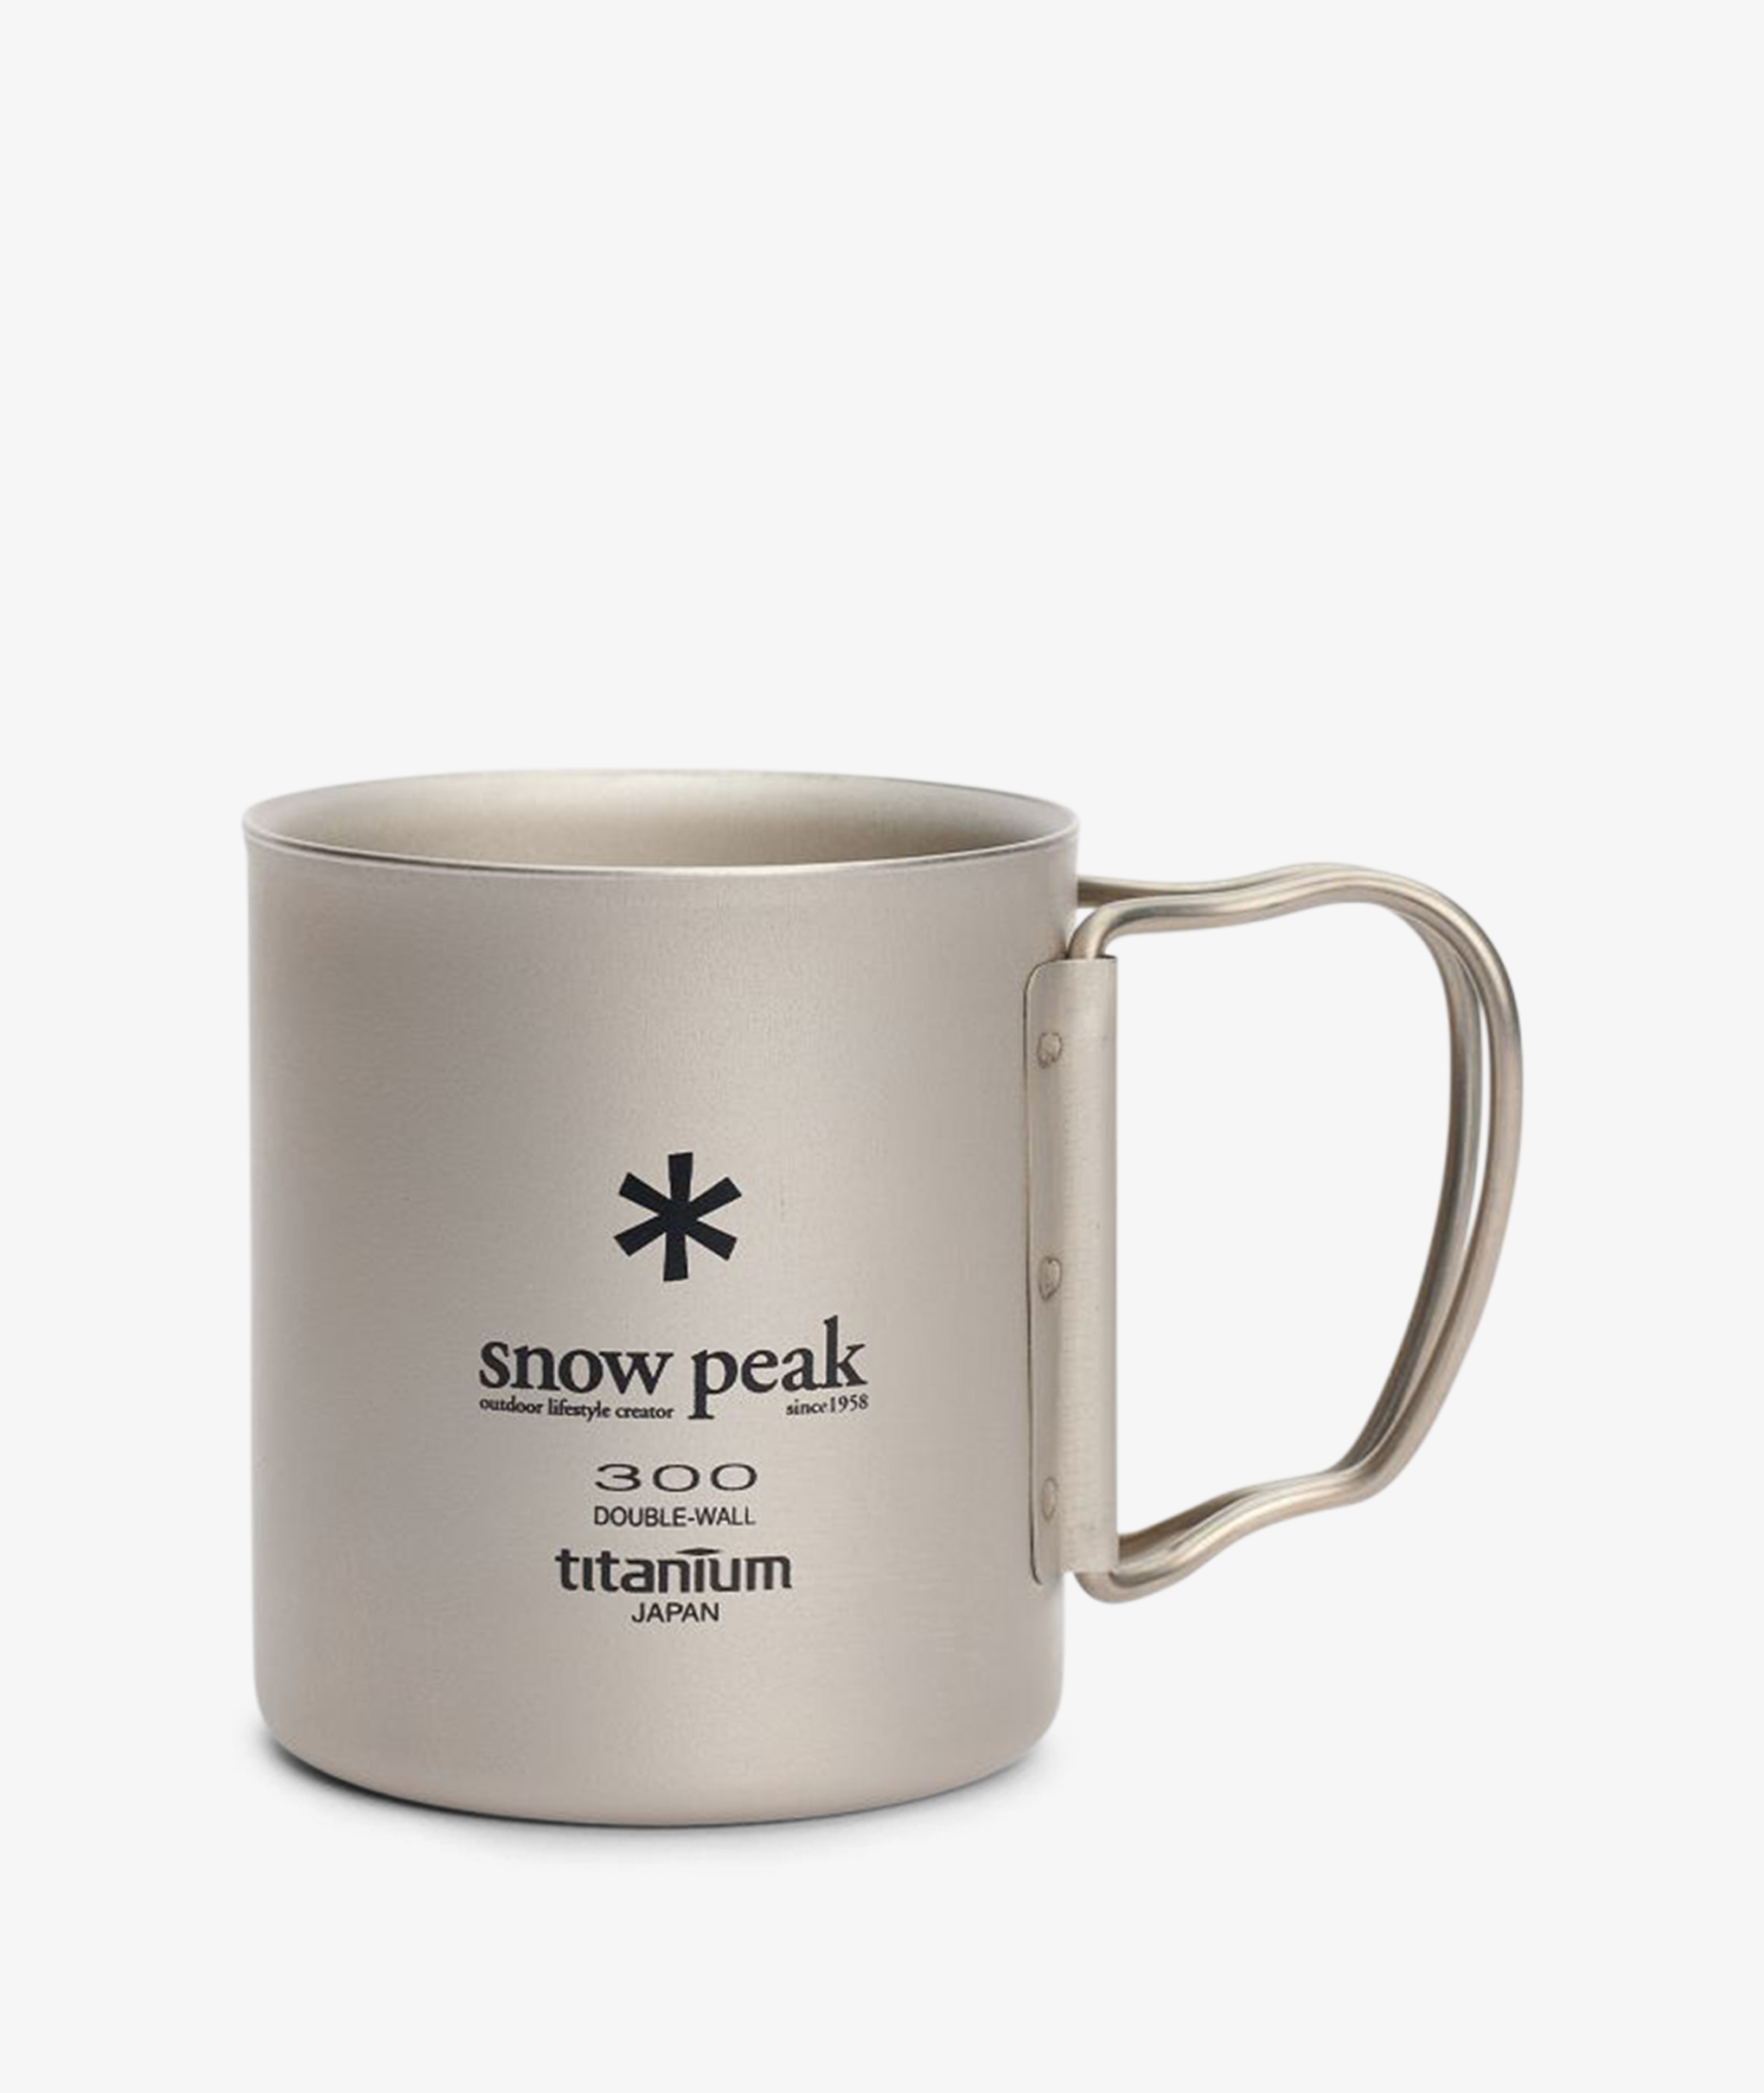 https://www.norsestore.com/shared/162/363/snow-peak-titanium-double-wall-cup-300_u.jpg